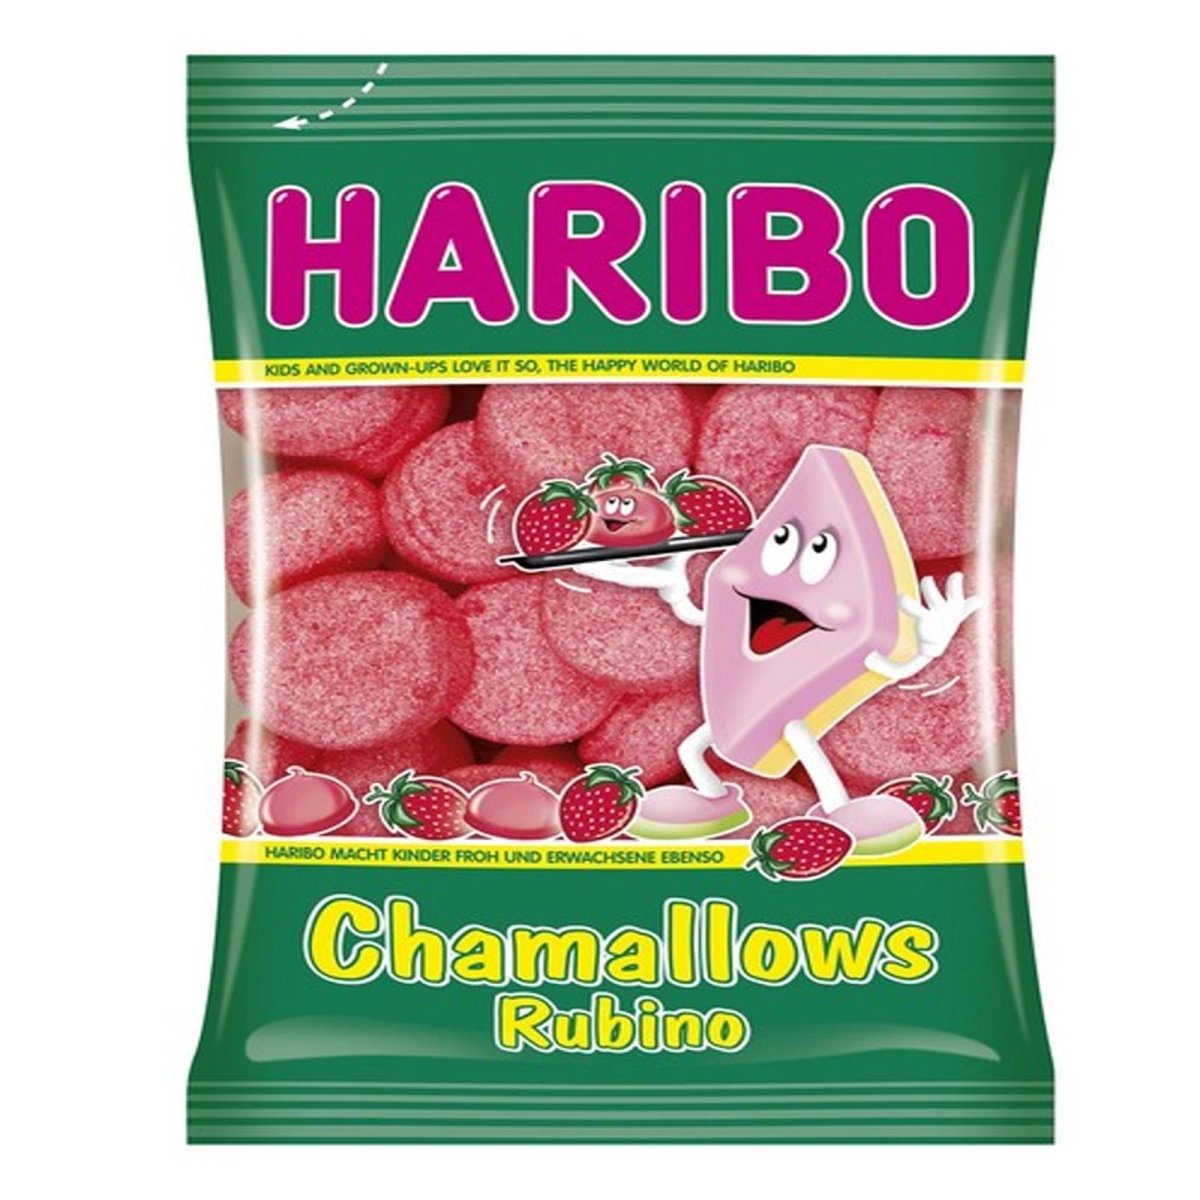 Haribo Charmallows Rubin0 (Germany) 175g - Candy Mail UK